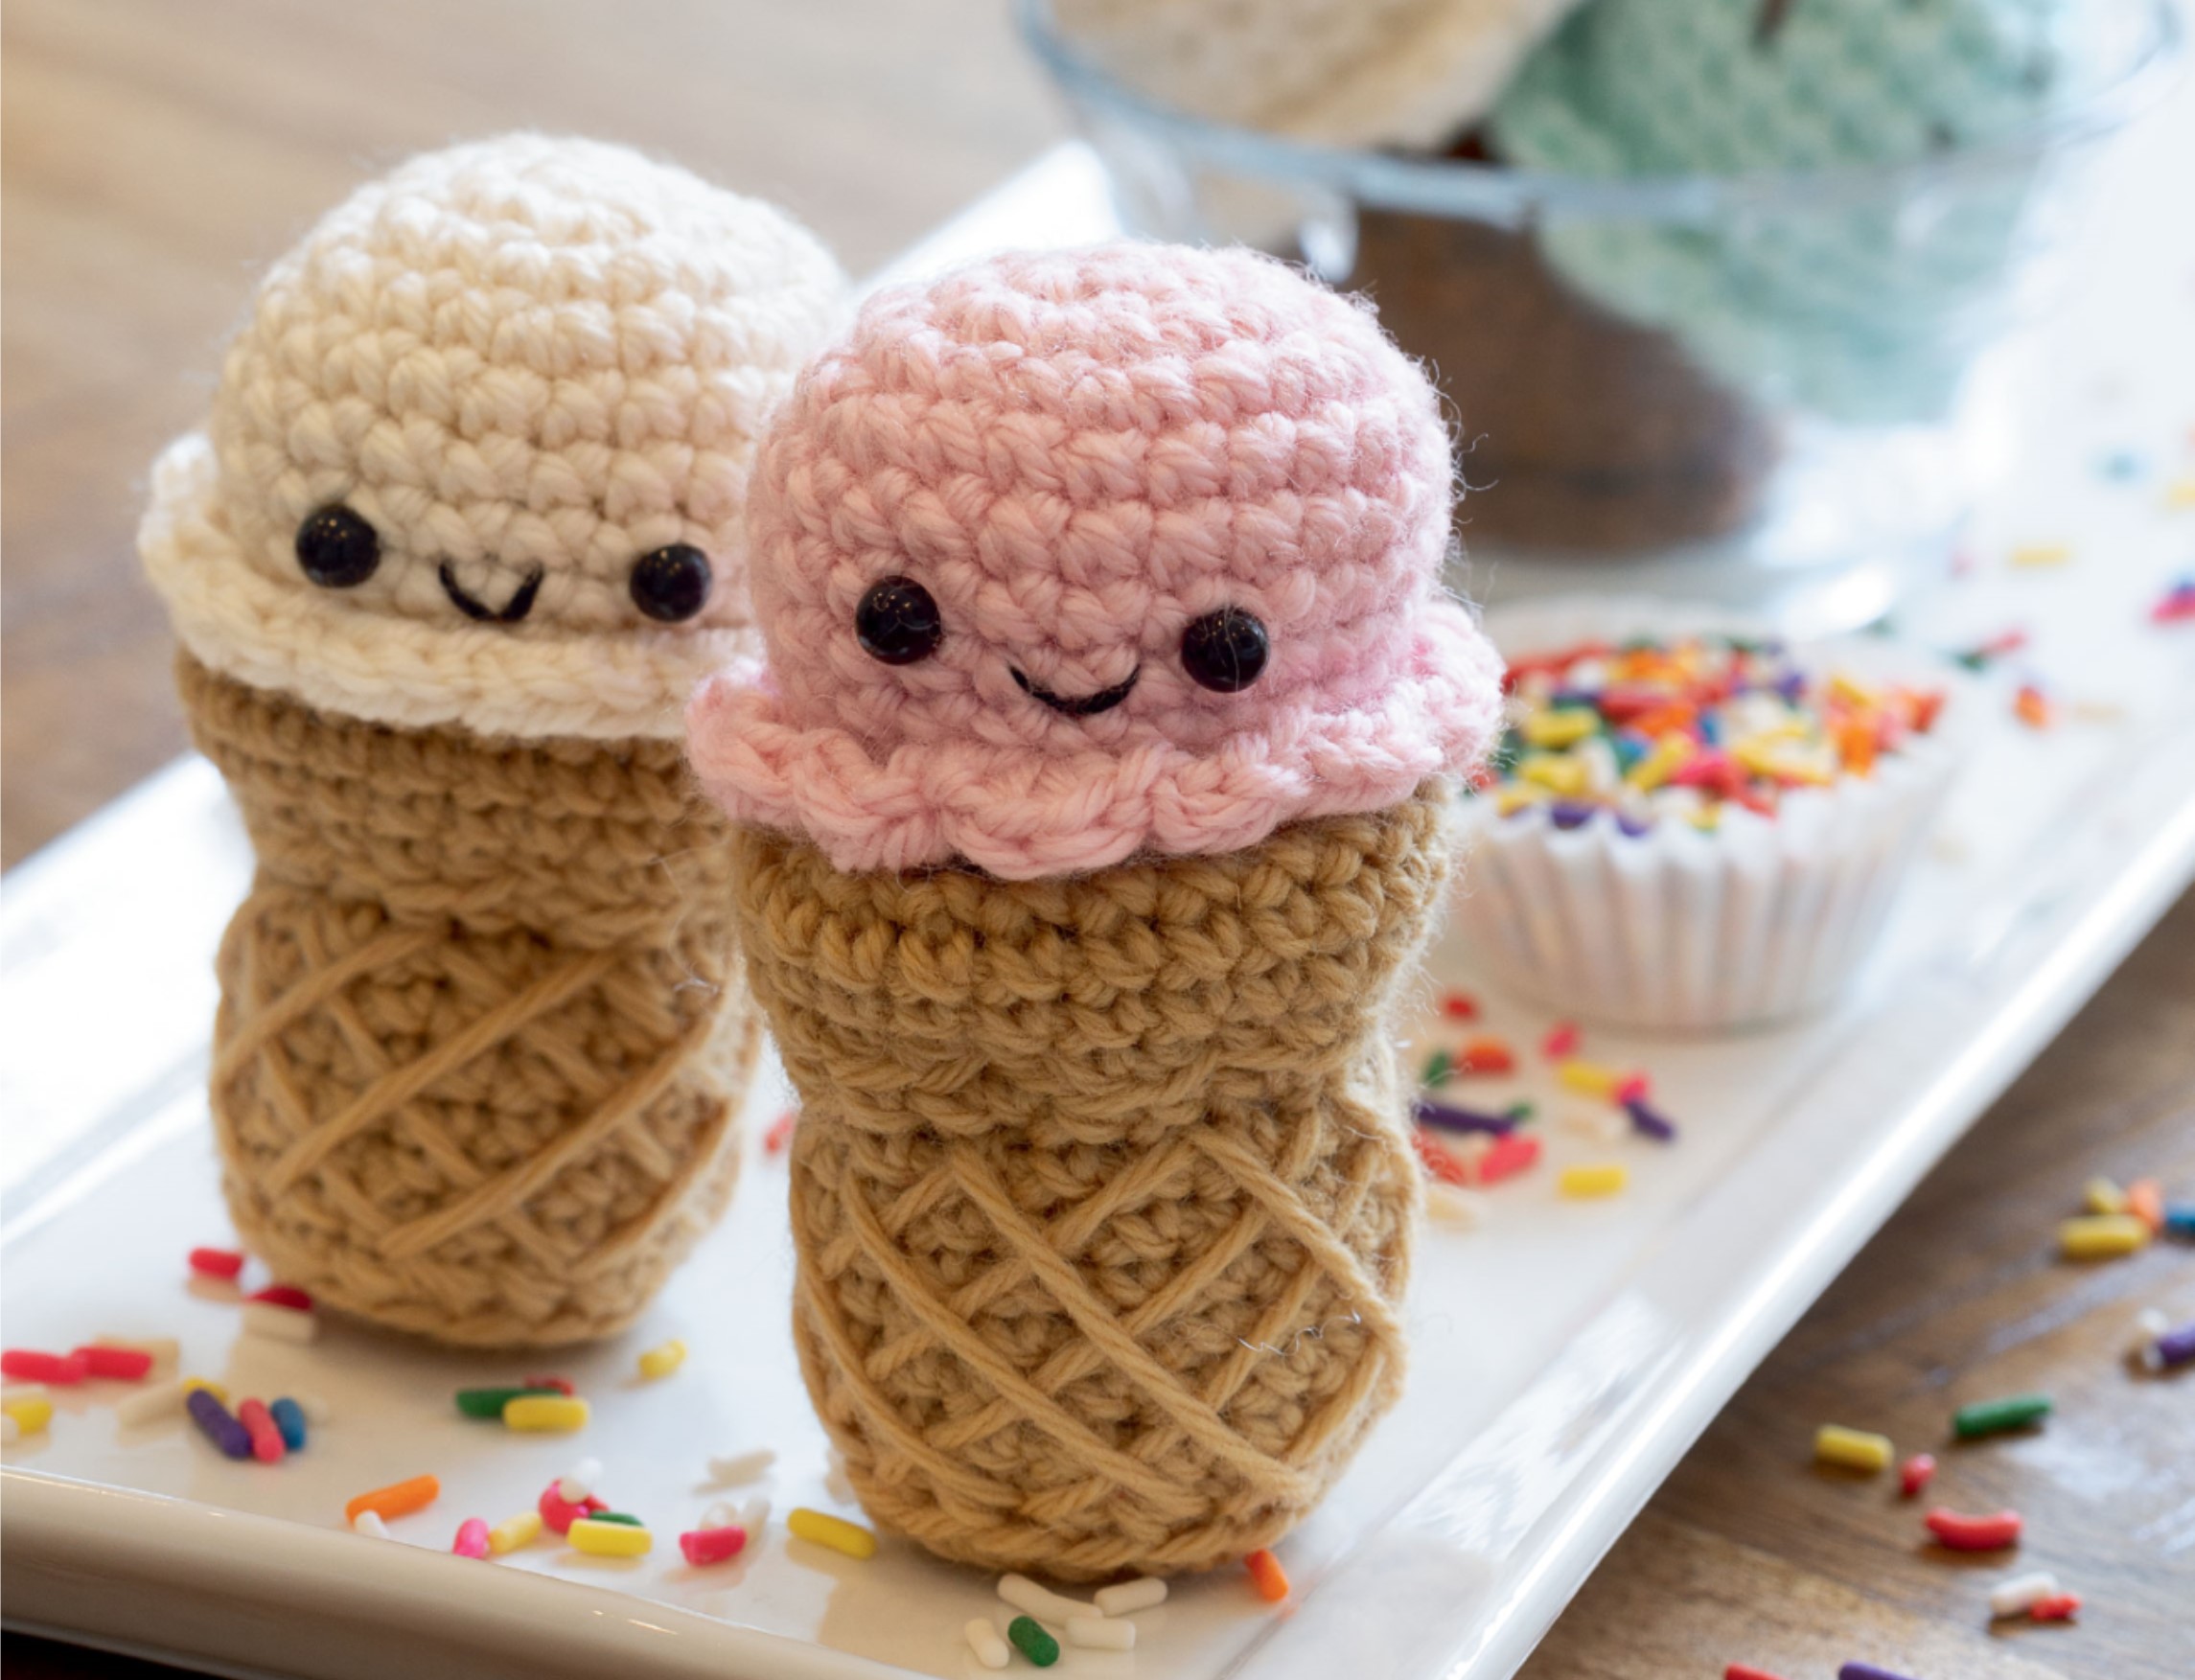 https://cassiefairy.com/wp-content/uploads/2019/06/how-to-crochet-an-amigurumi-ice-cream-cone-.jpg